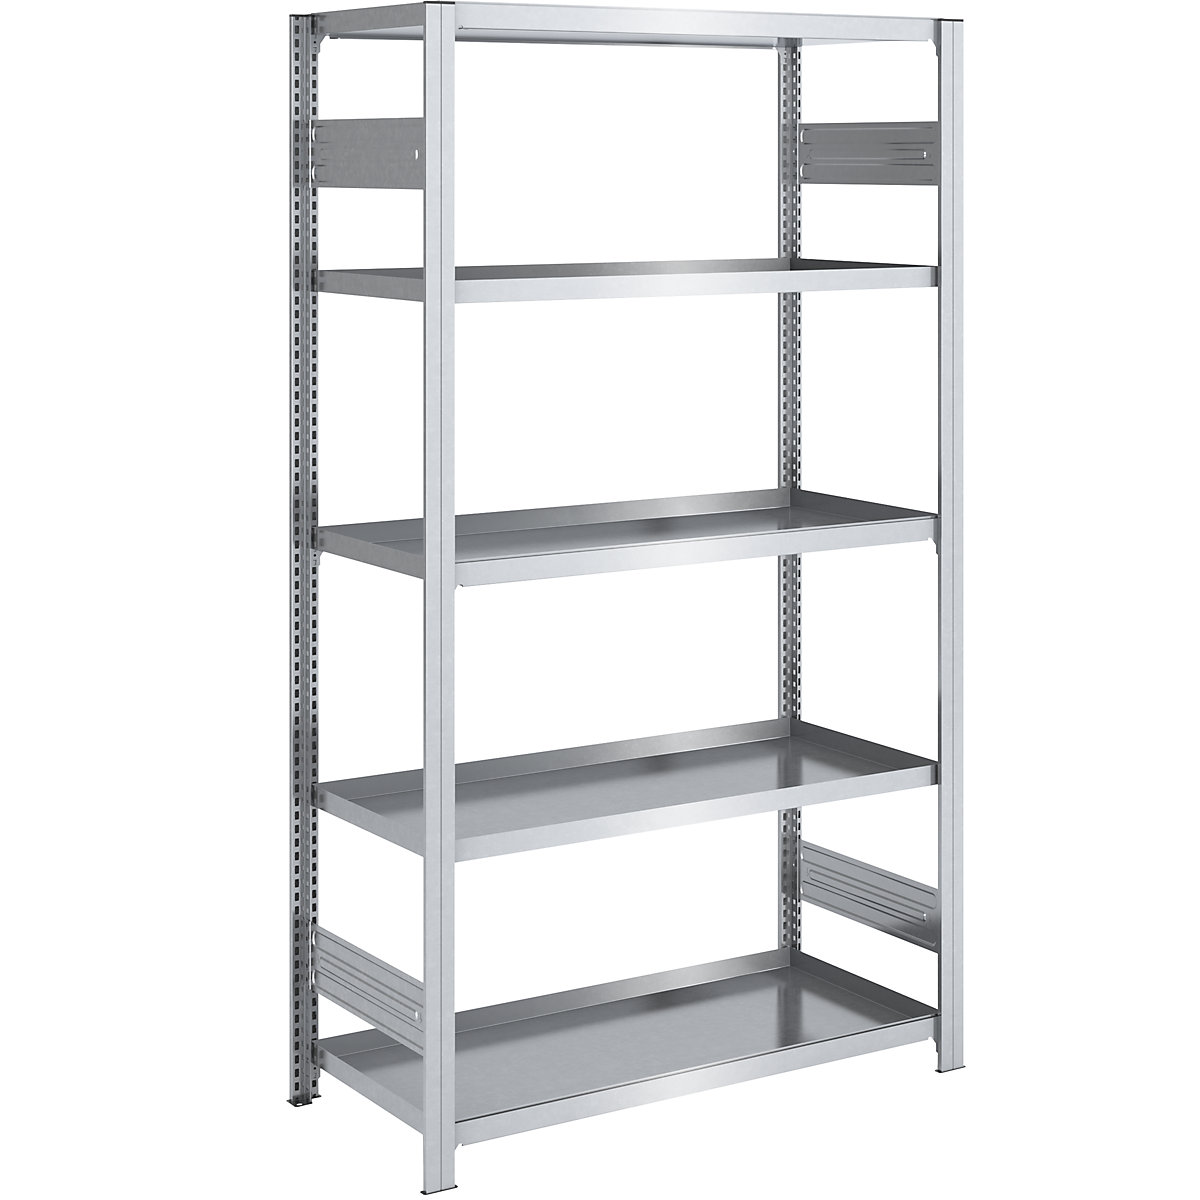 Tray shelf unit – hofe, shelf unit height 2000 mm, tray width 1000 mm, tray depth 600 mm, standard shelf unit